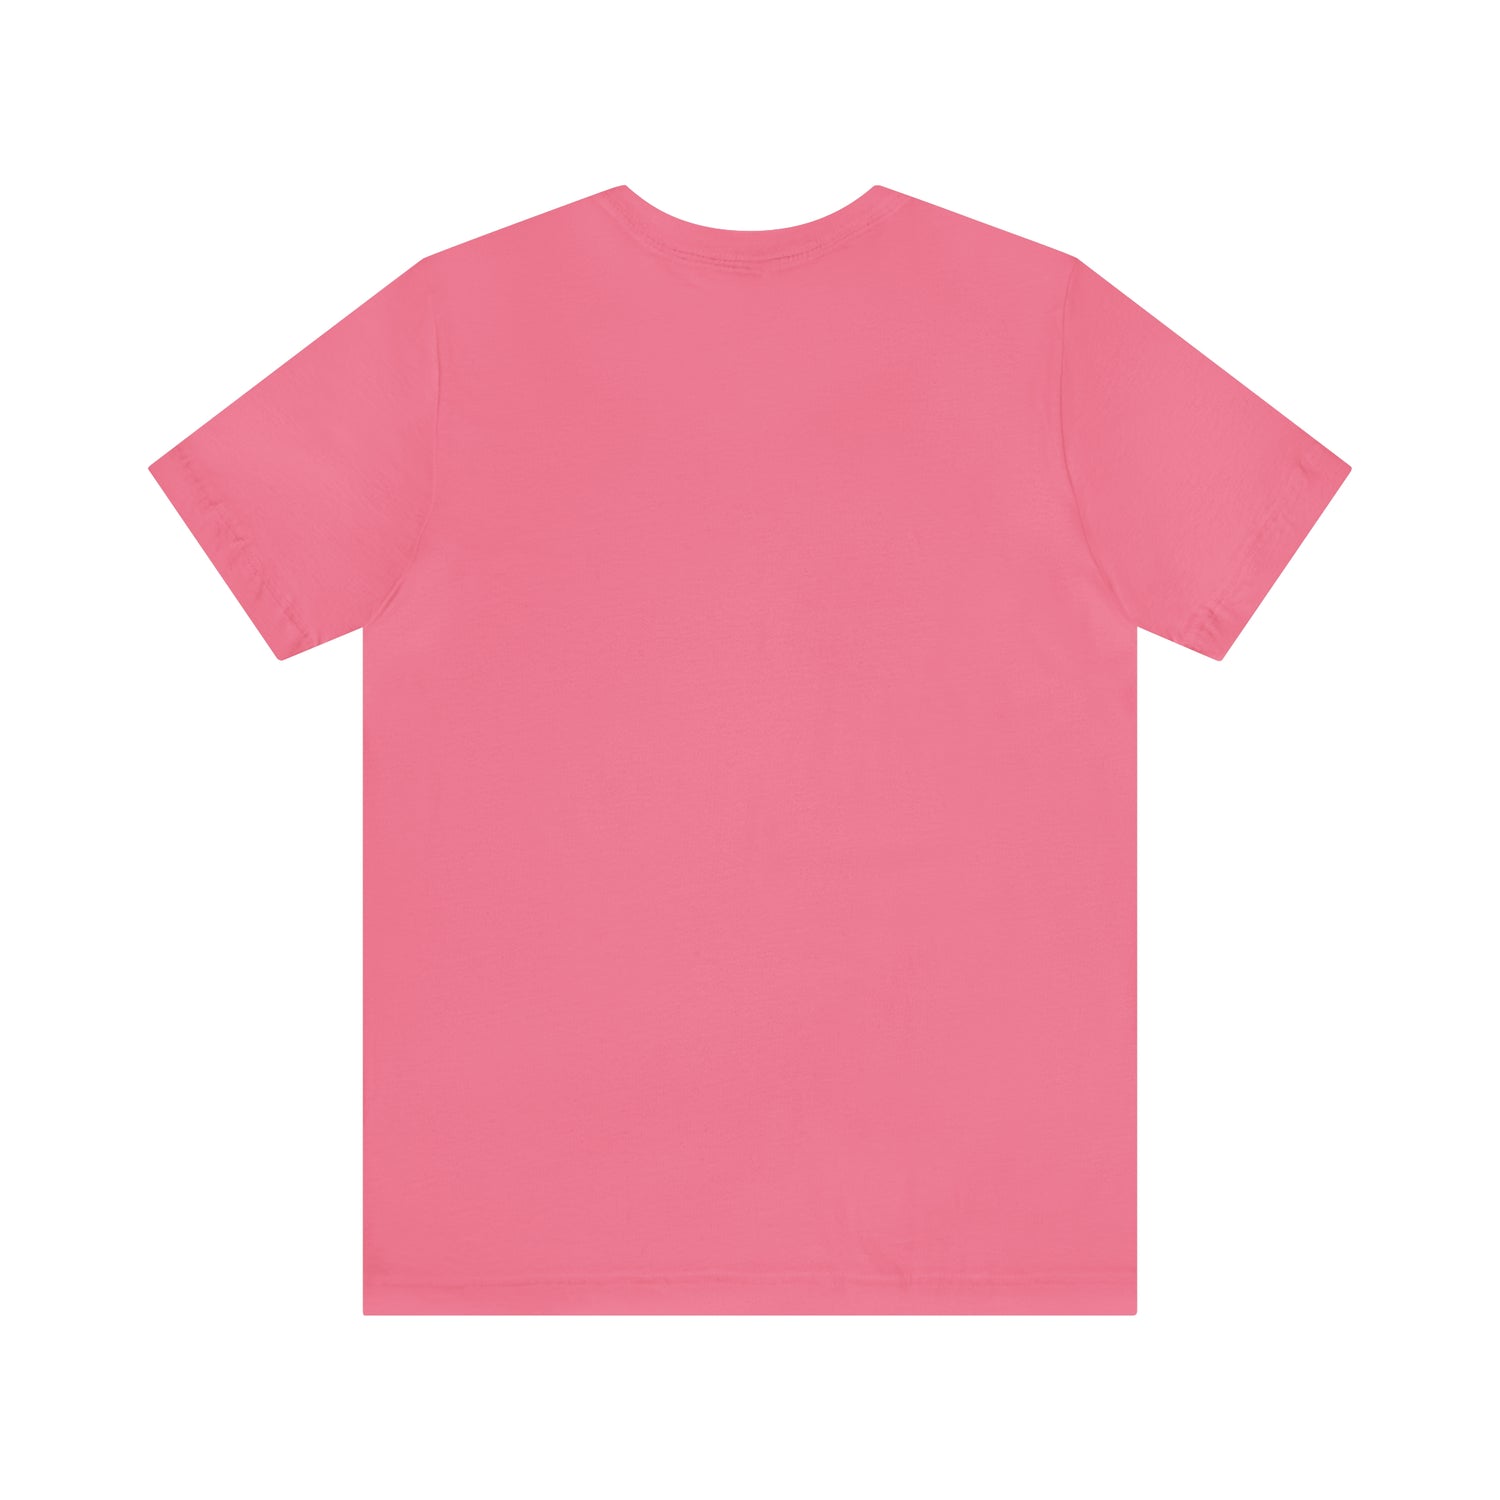 Yoga Theme T-Shirt | Yoga Lover Gift Idea T-Shirt Petrova Designs